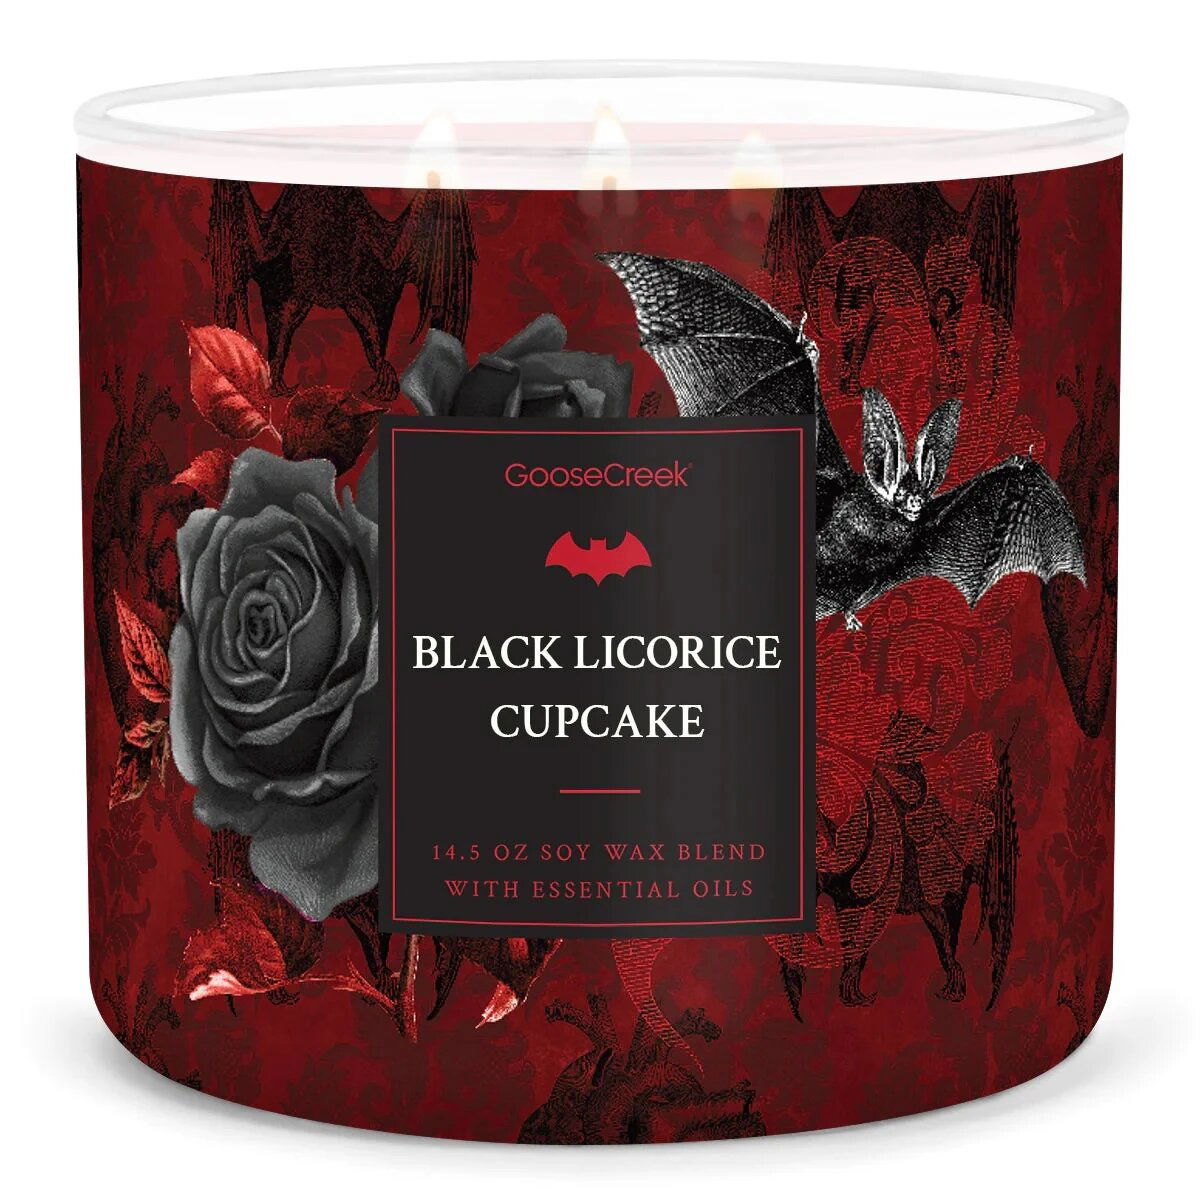 Black Licorice Cupcake 411g (3-Docht)